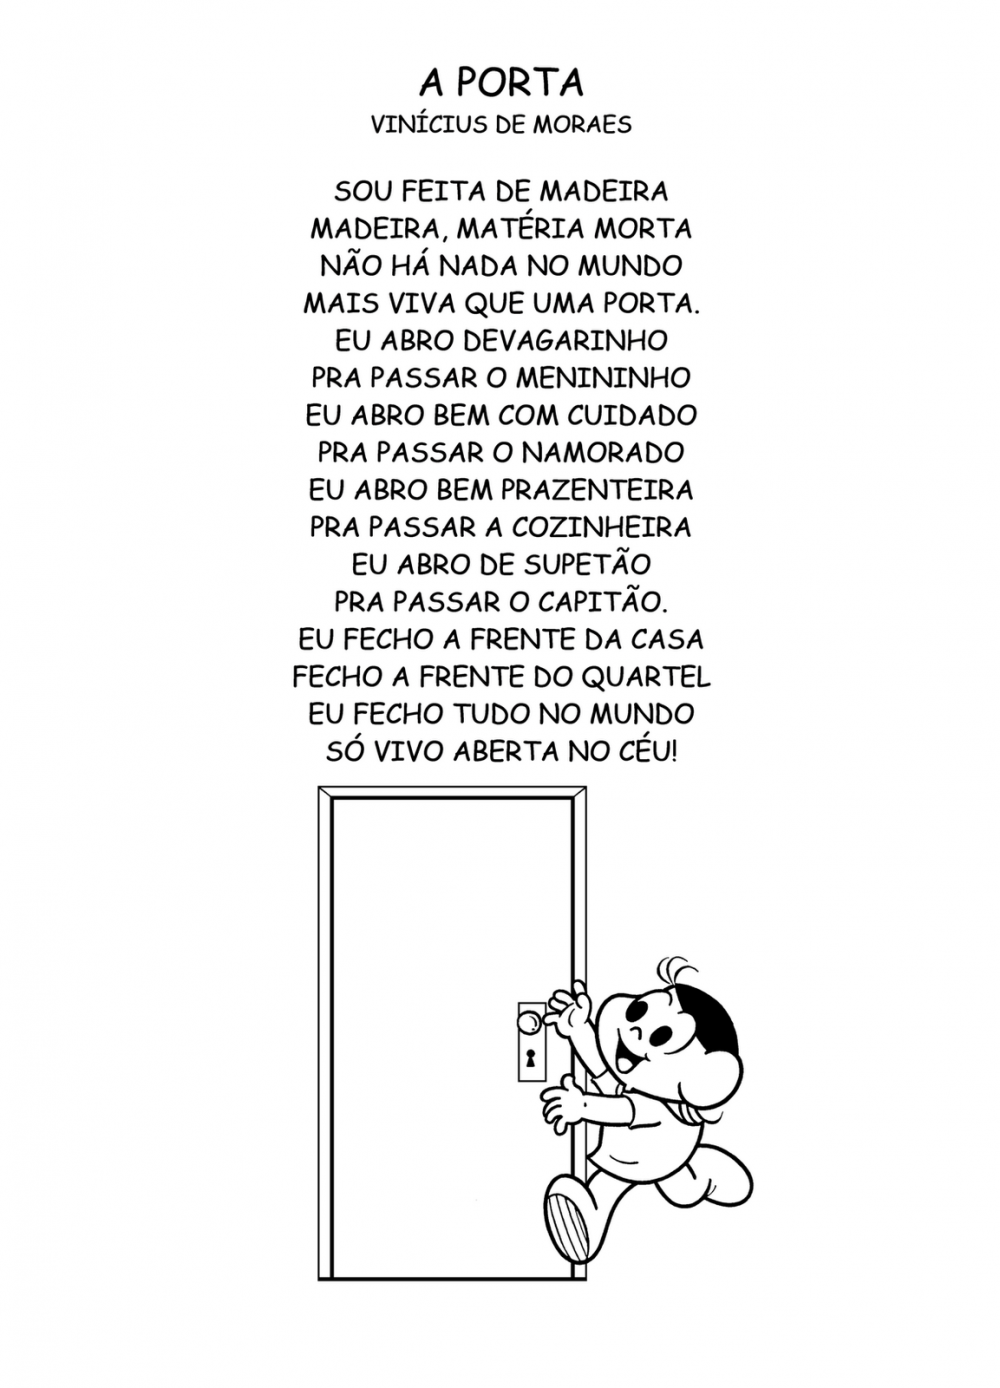 Poesia A Porta de Vinicius de Moraes para imprimir.